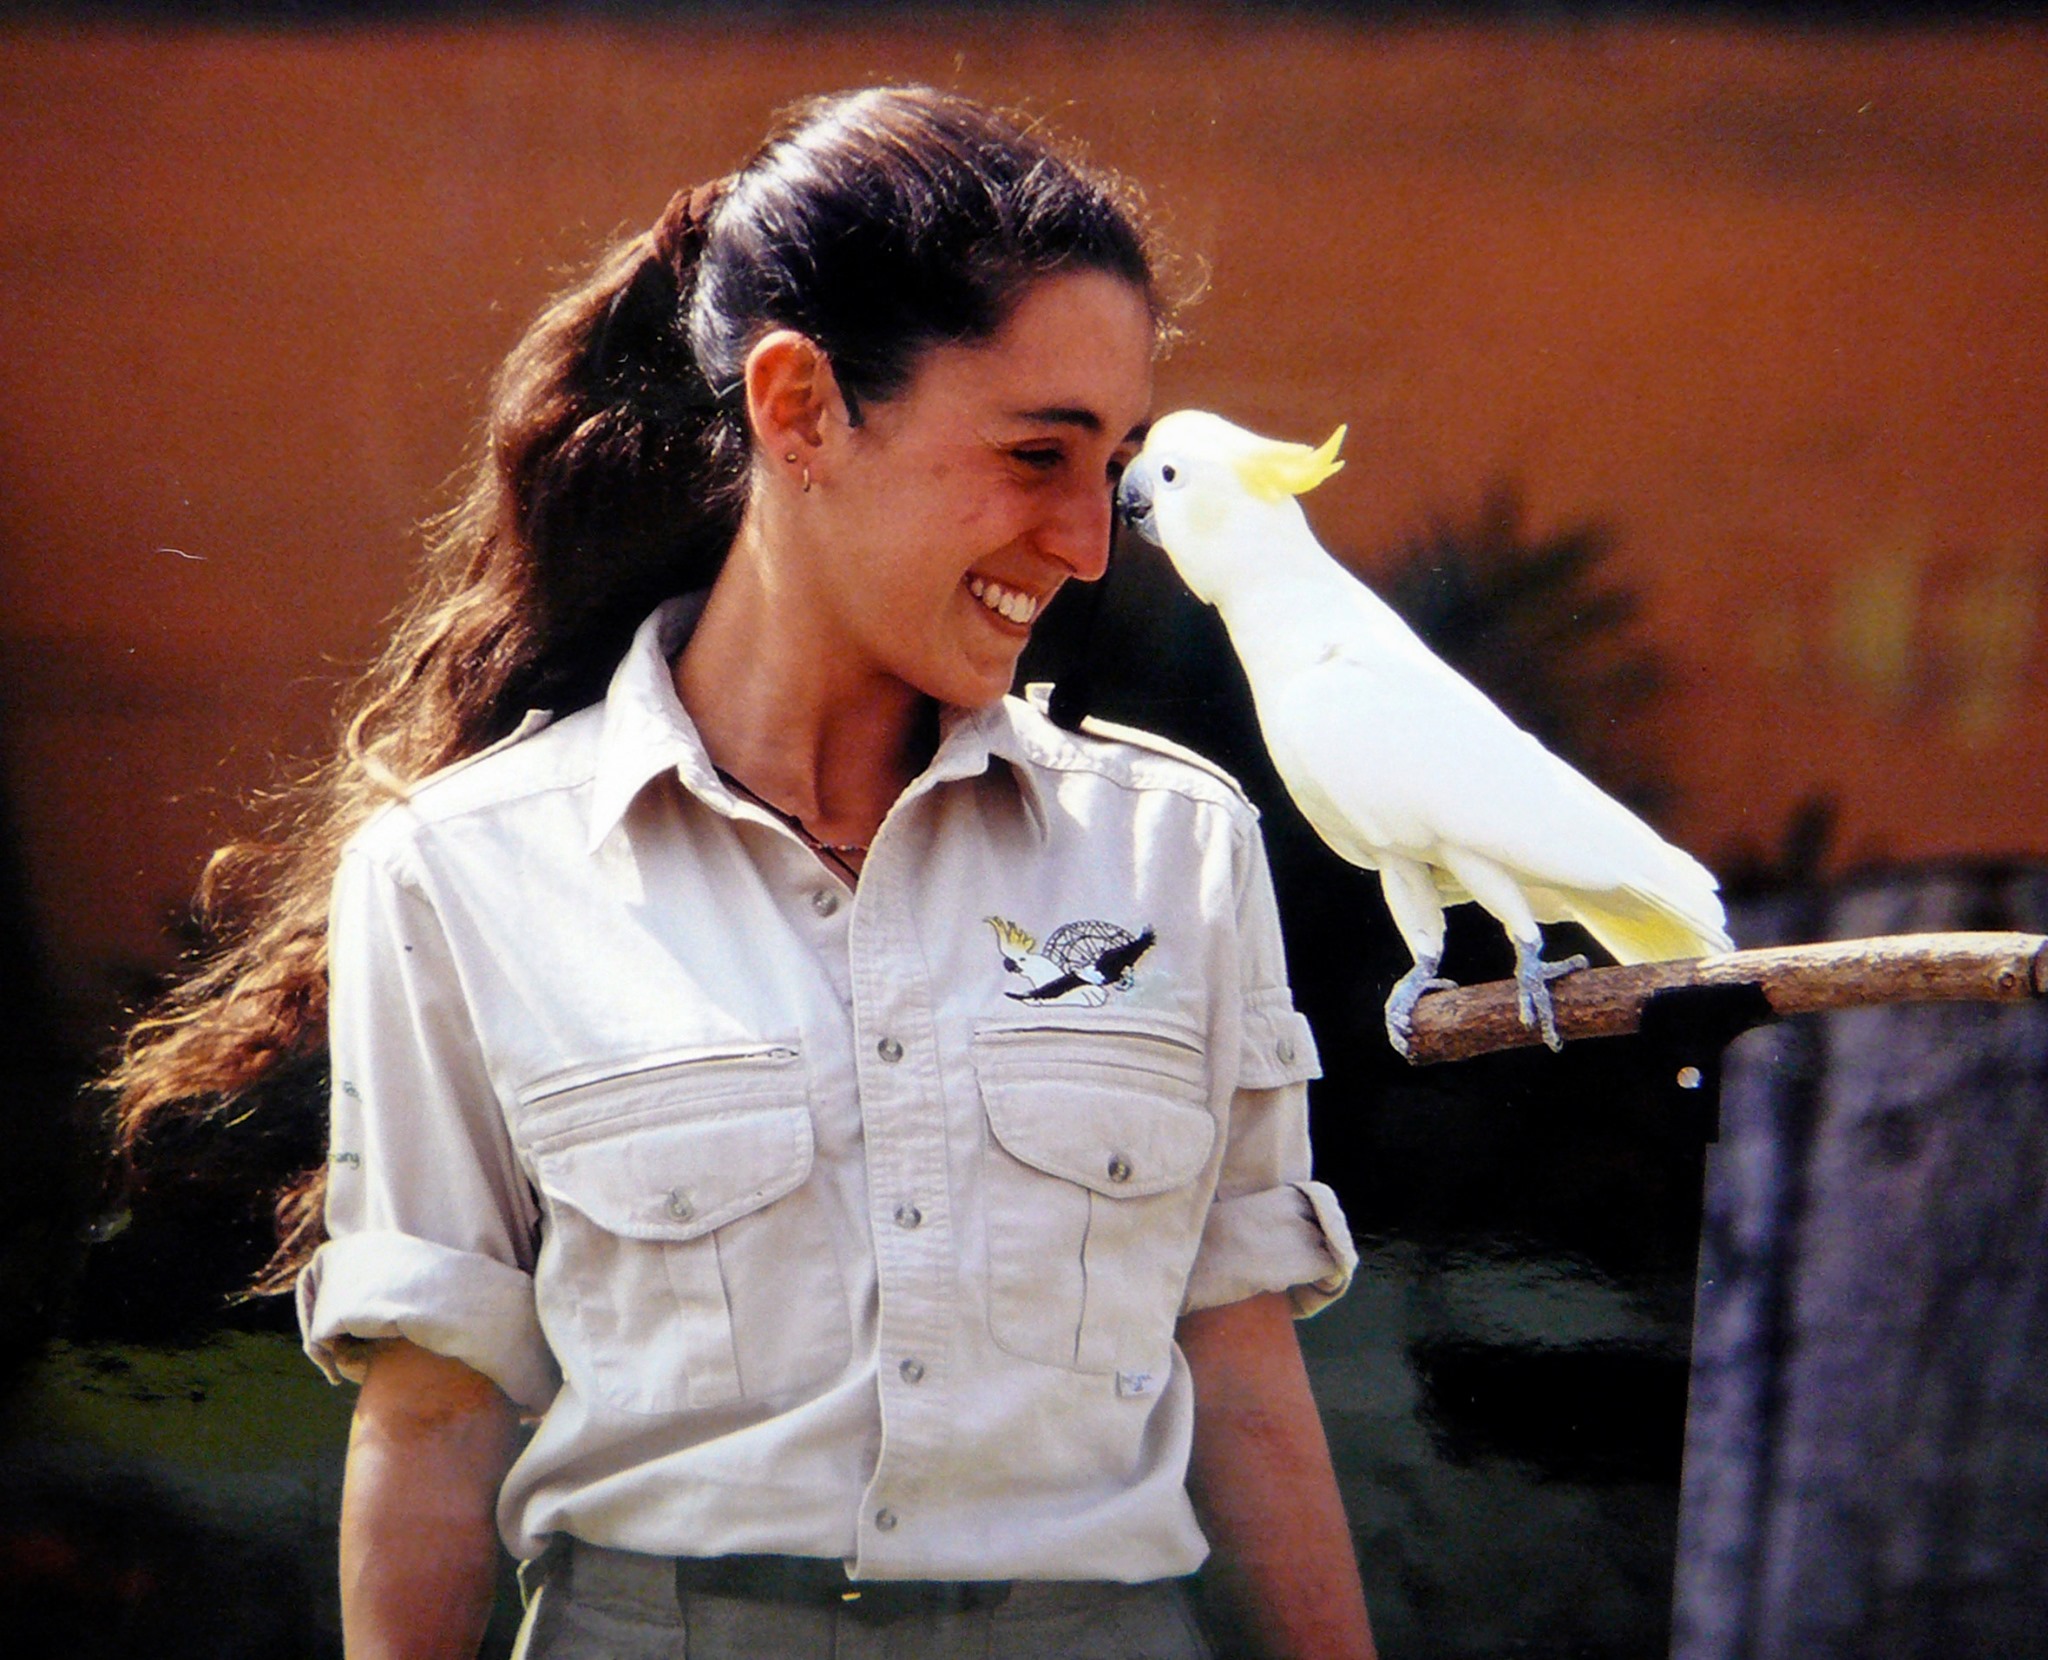 Cassie Malina parrot trainer